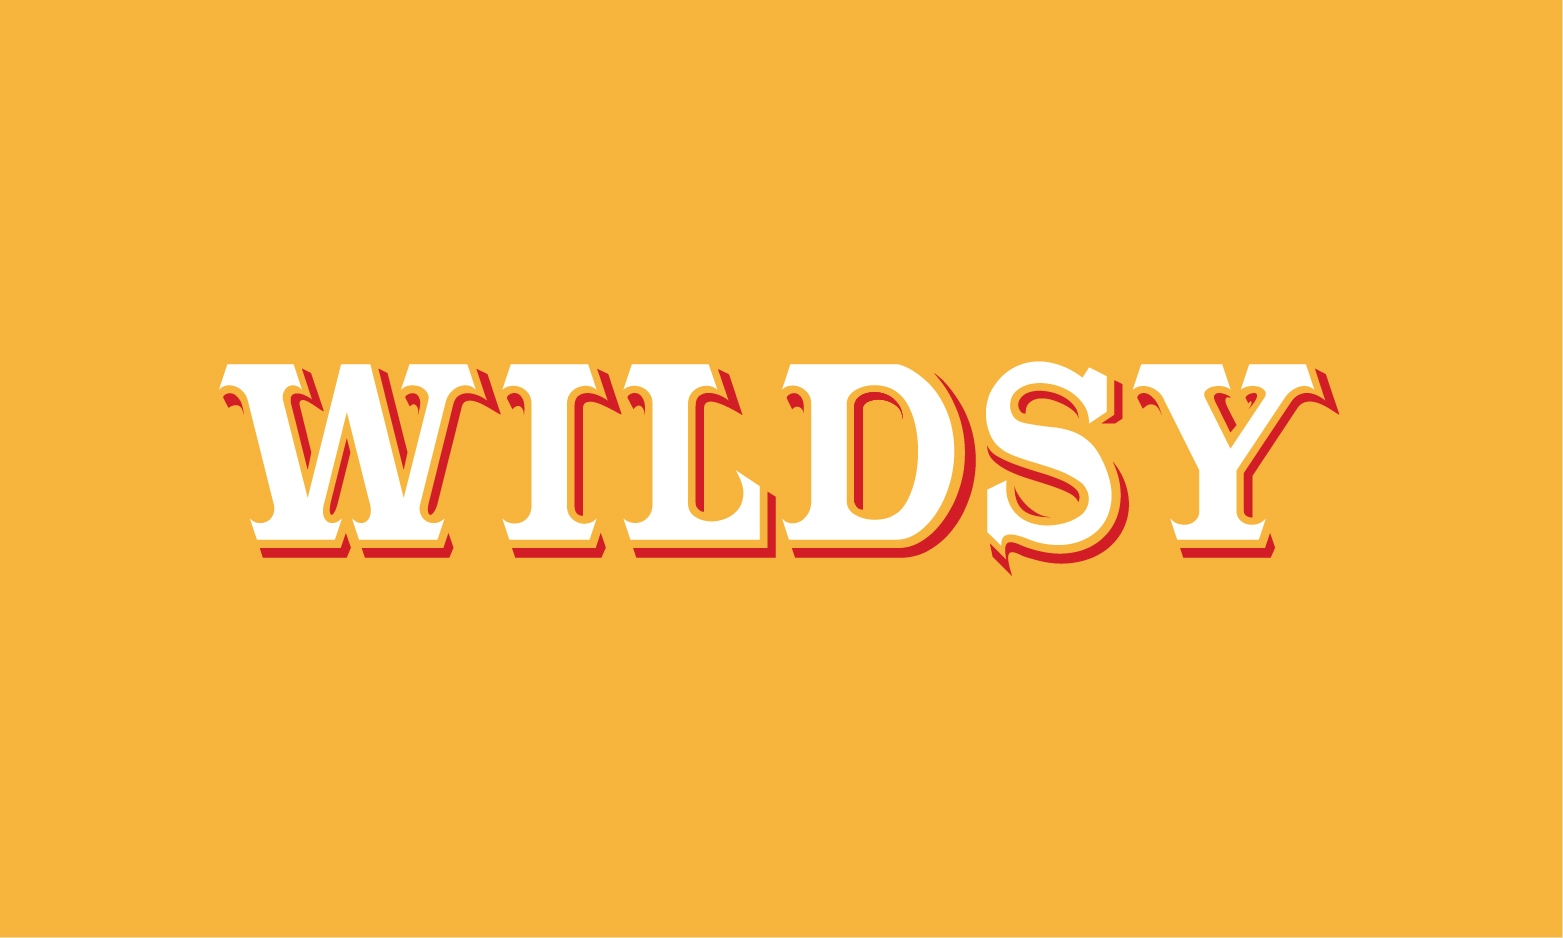 Wildsy.com - Creative brandable domain for sale